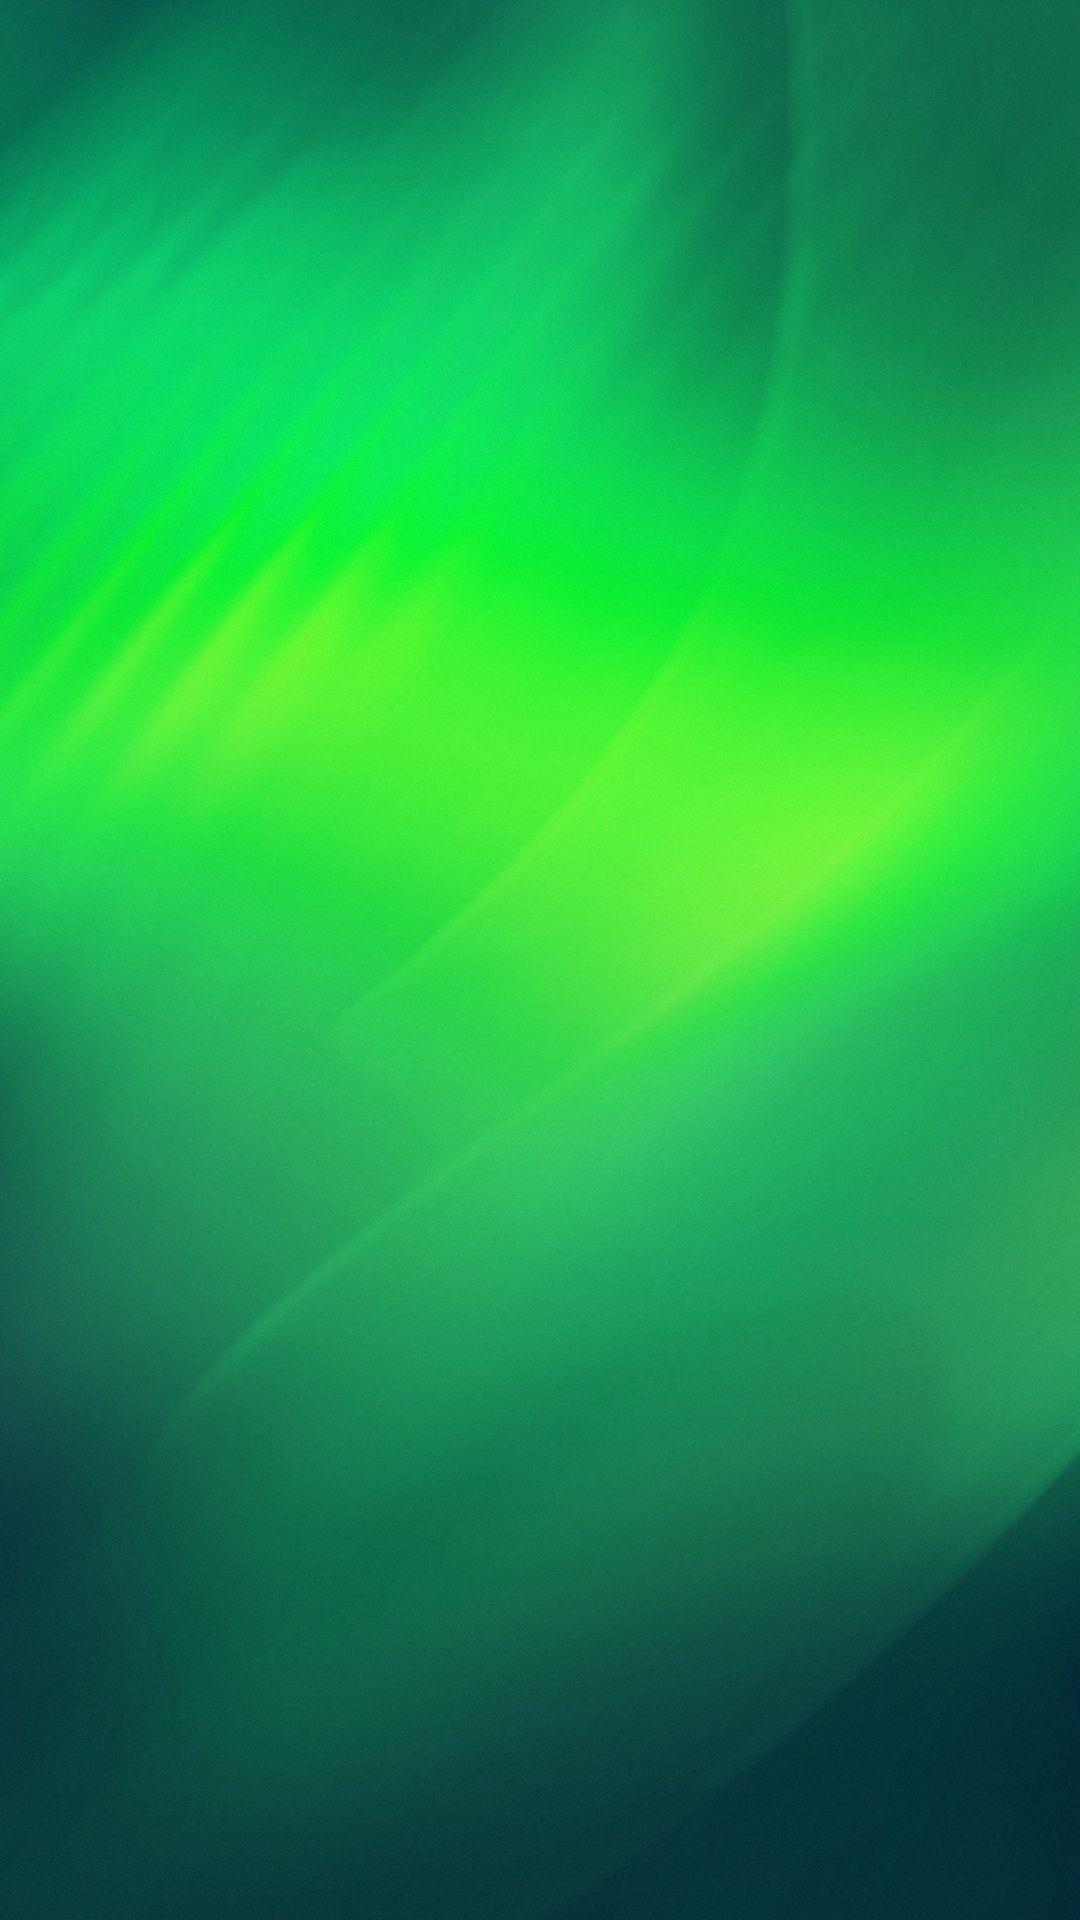 Abstract Green Light Pattern iPhone 6 wallpaper. Colors, Wallpaper